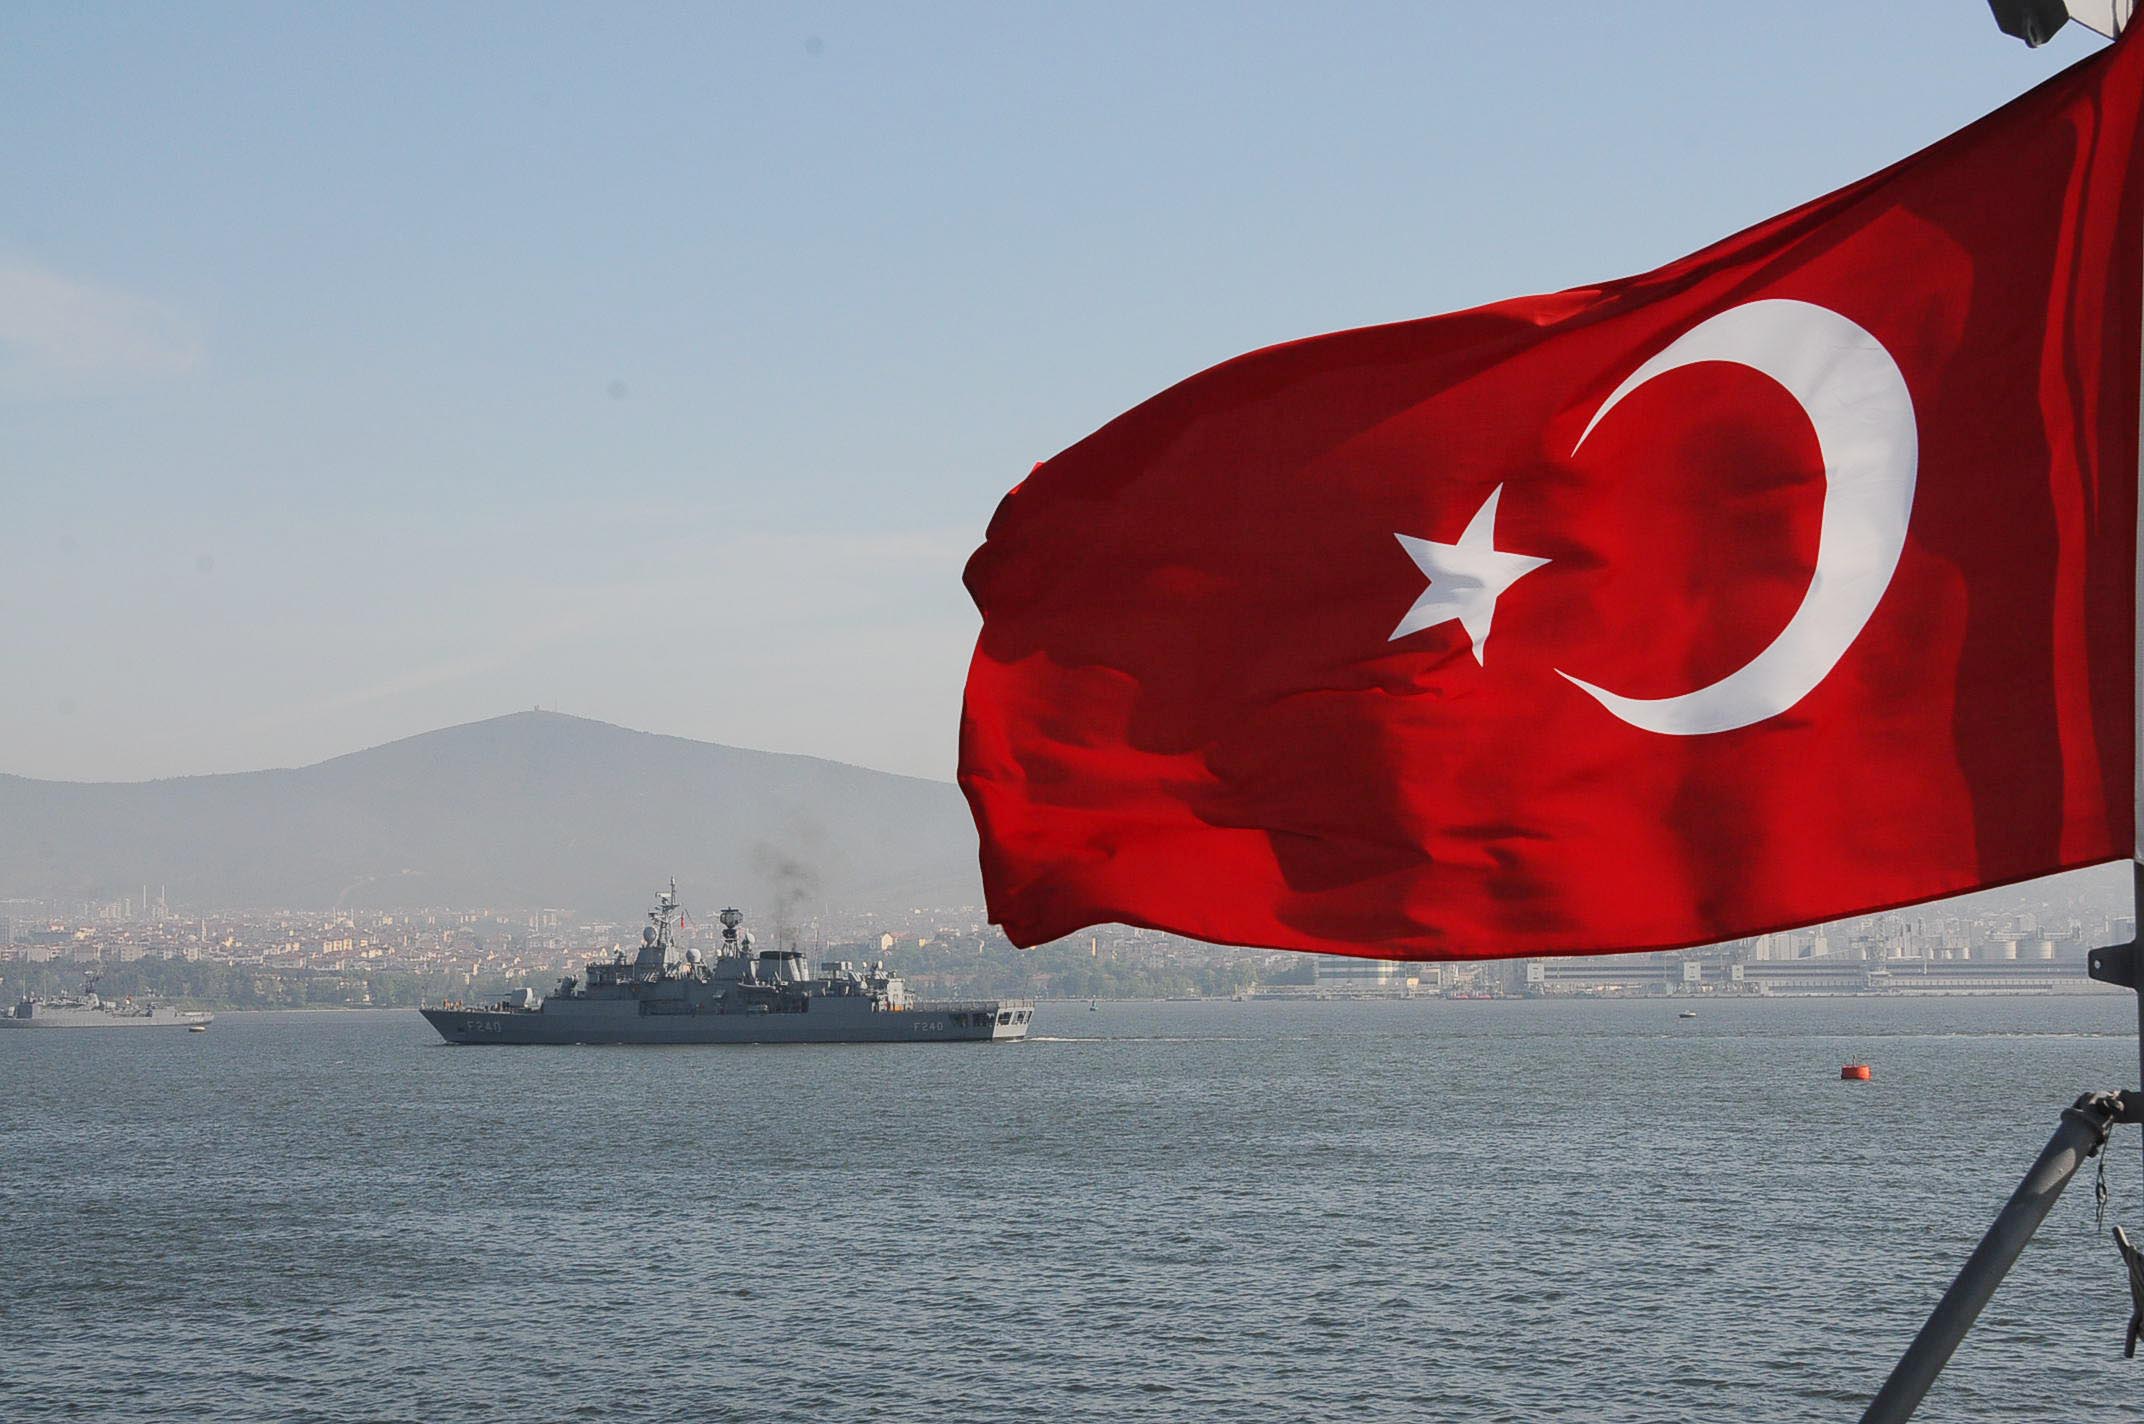 Turkish Naval Forces frigate Yavuz